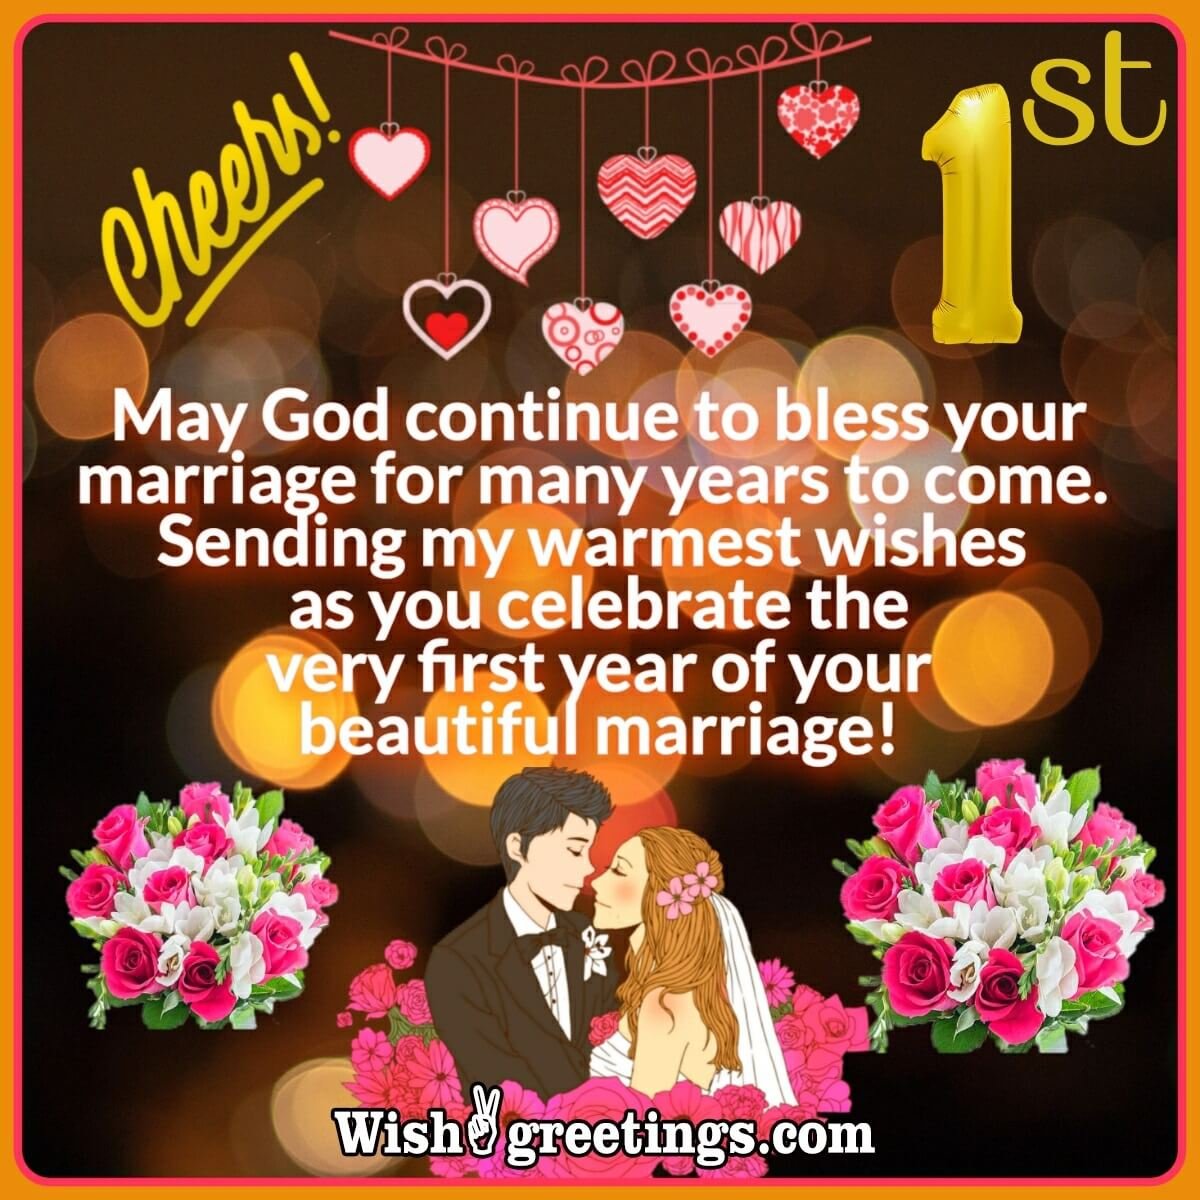 1st Year Of Beautiful Marriage, Wish Image